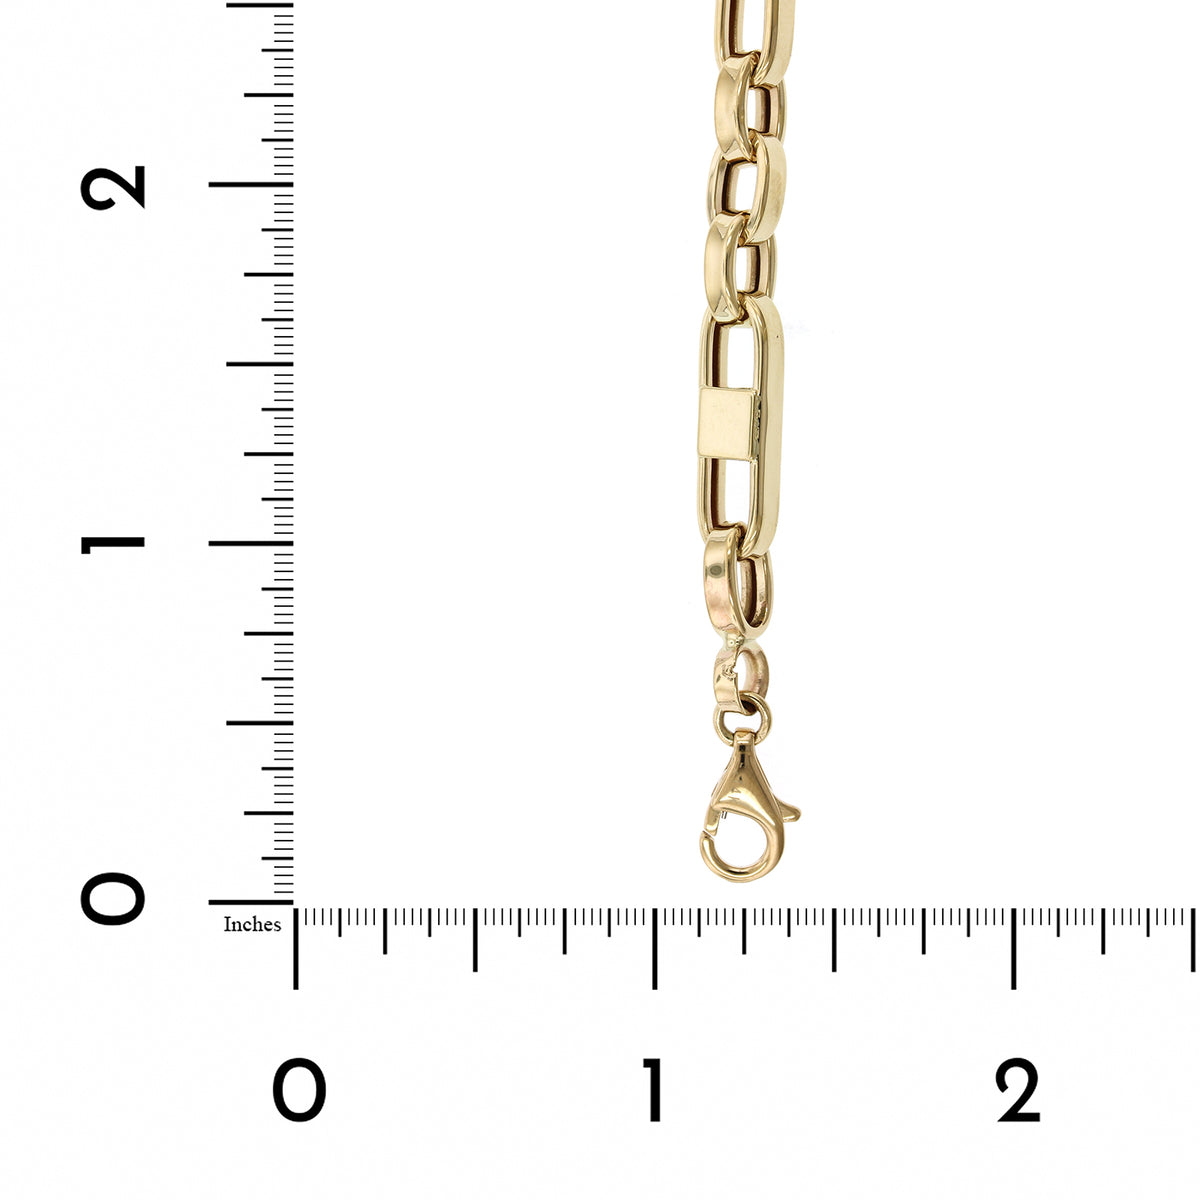 14K Yellow Gold Mariner Link Bracelet